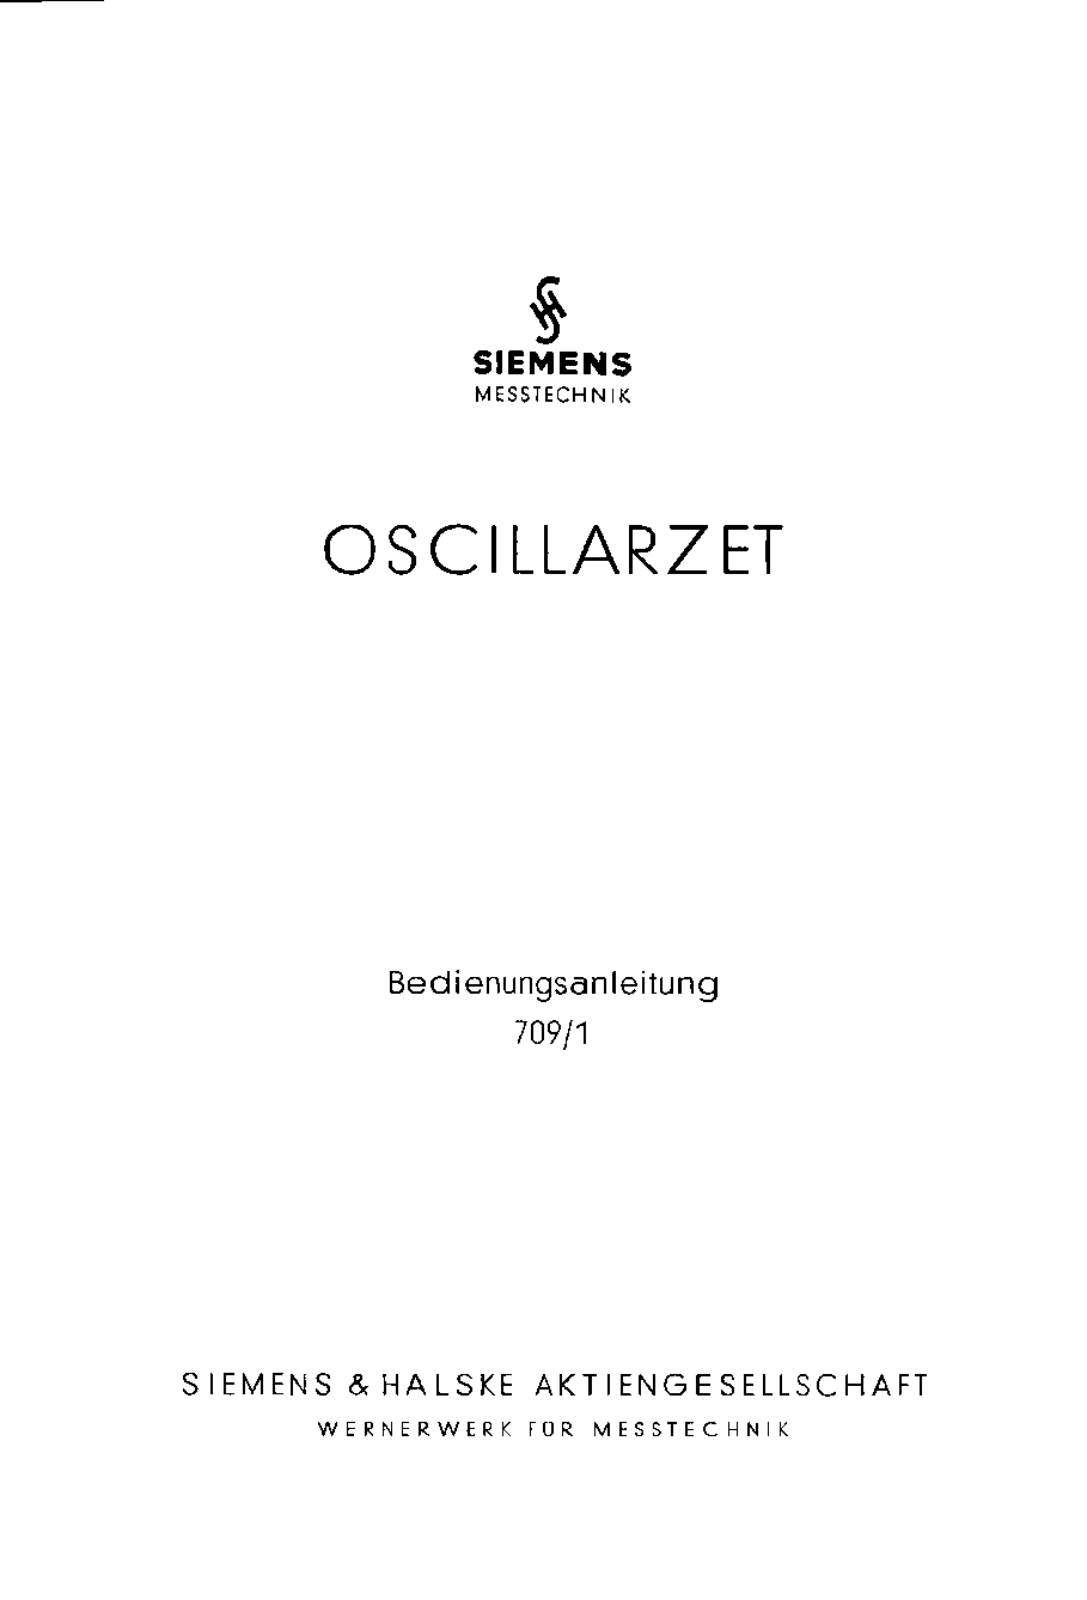 Siemens Oscillarzet Service manual